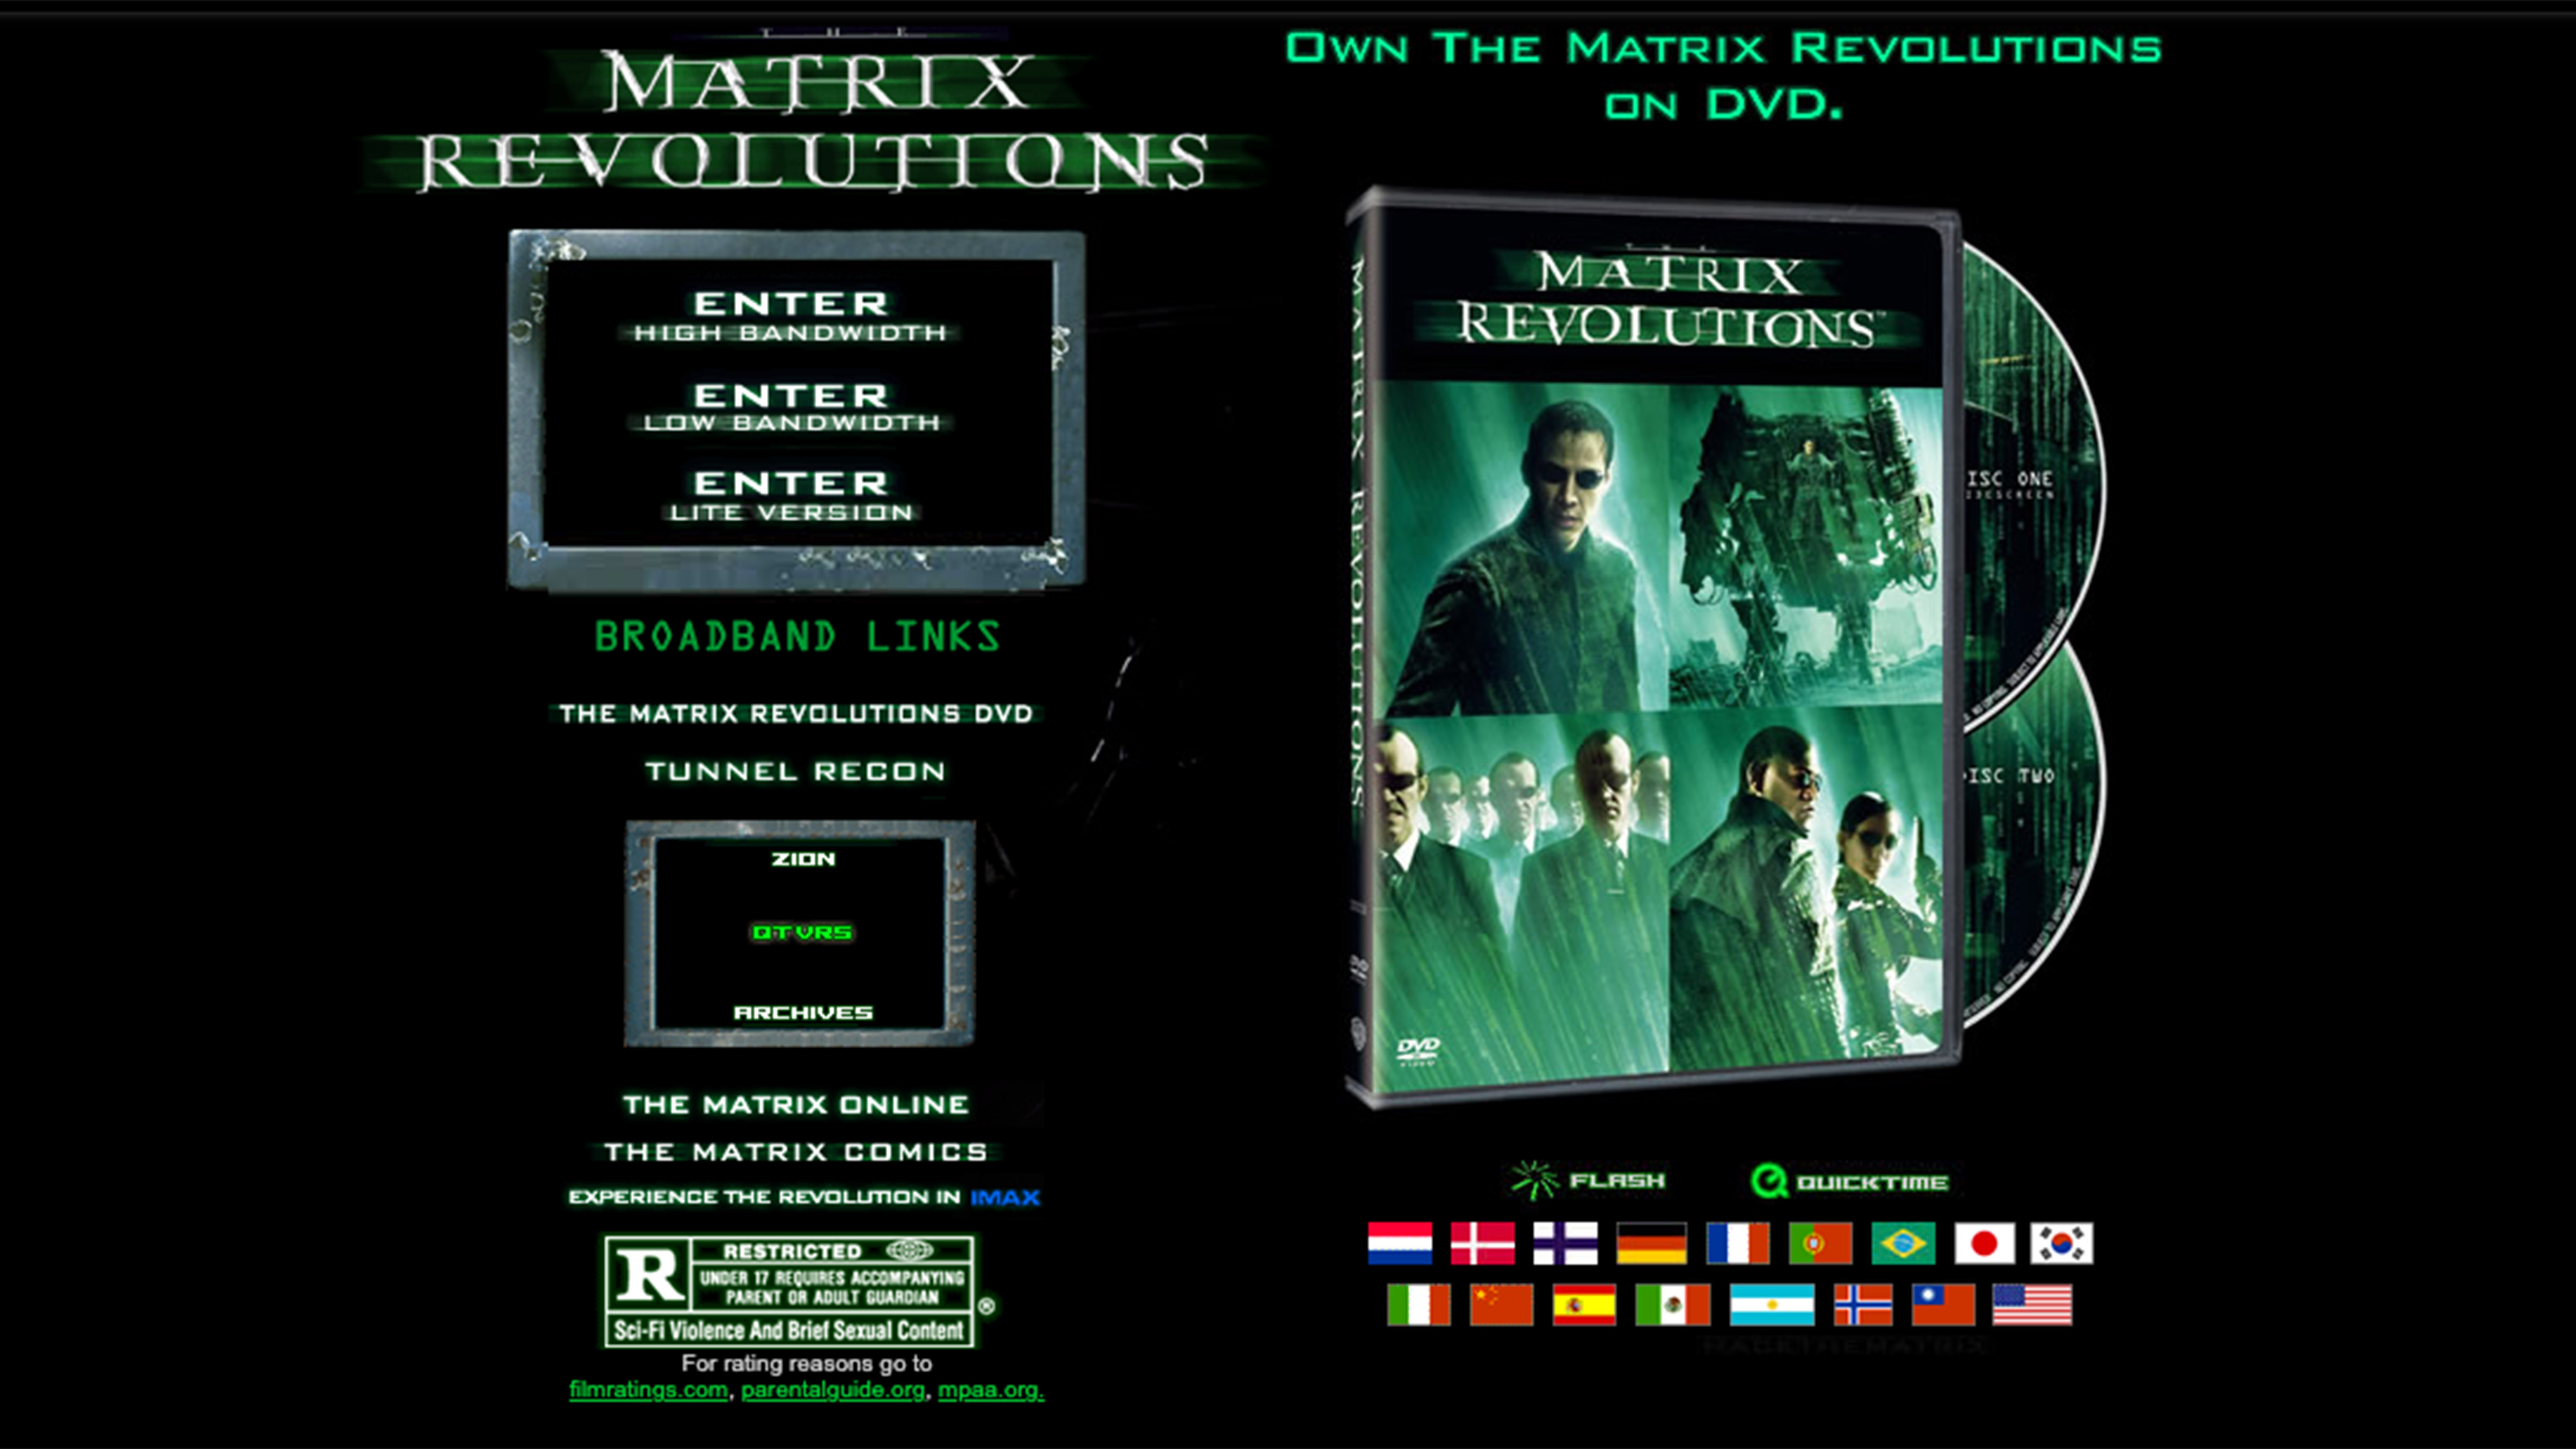 The old Matrix website.